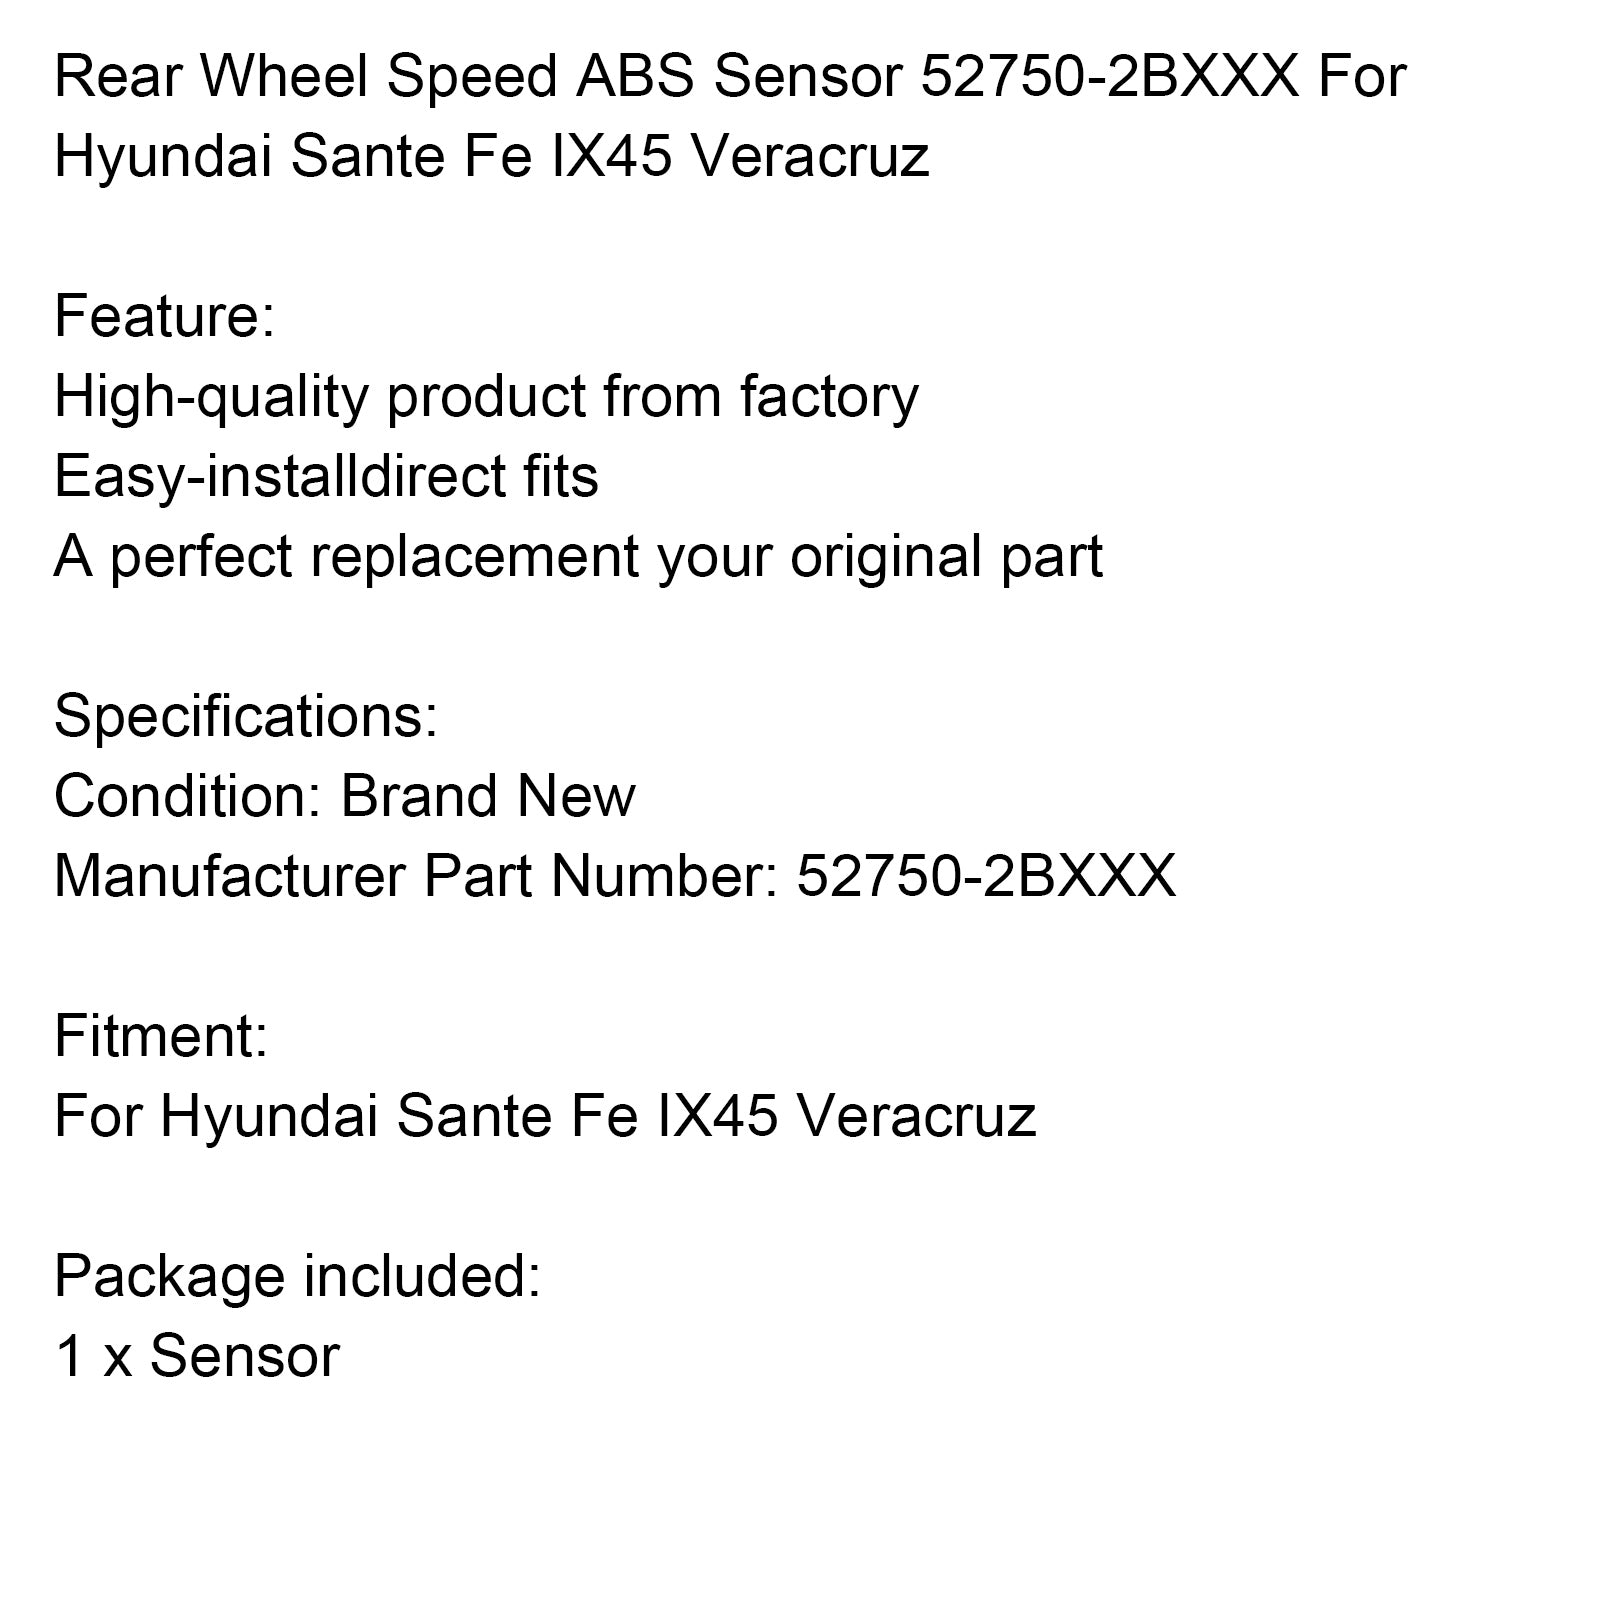 Sensor ABS de velocidad de rueda trasera 52750-2BXXX para Hyundai Sante Fe IX45 Veracruz